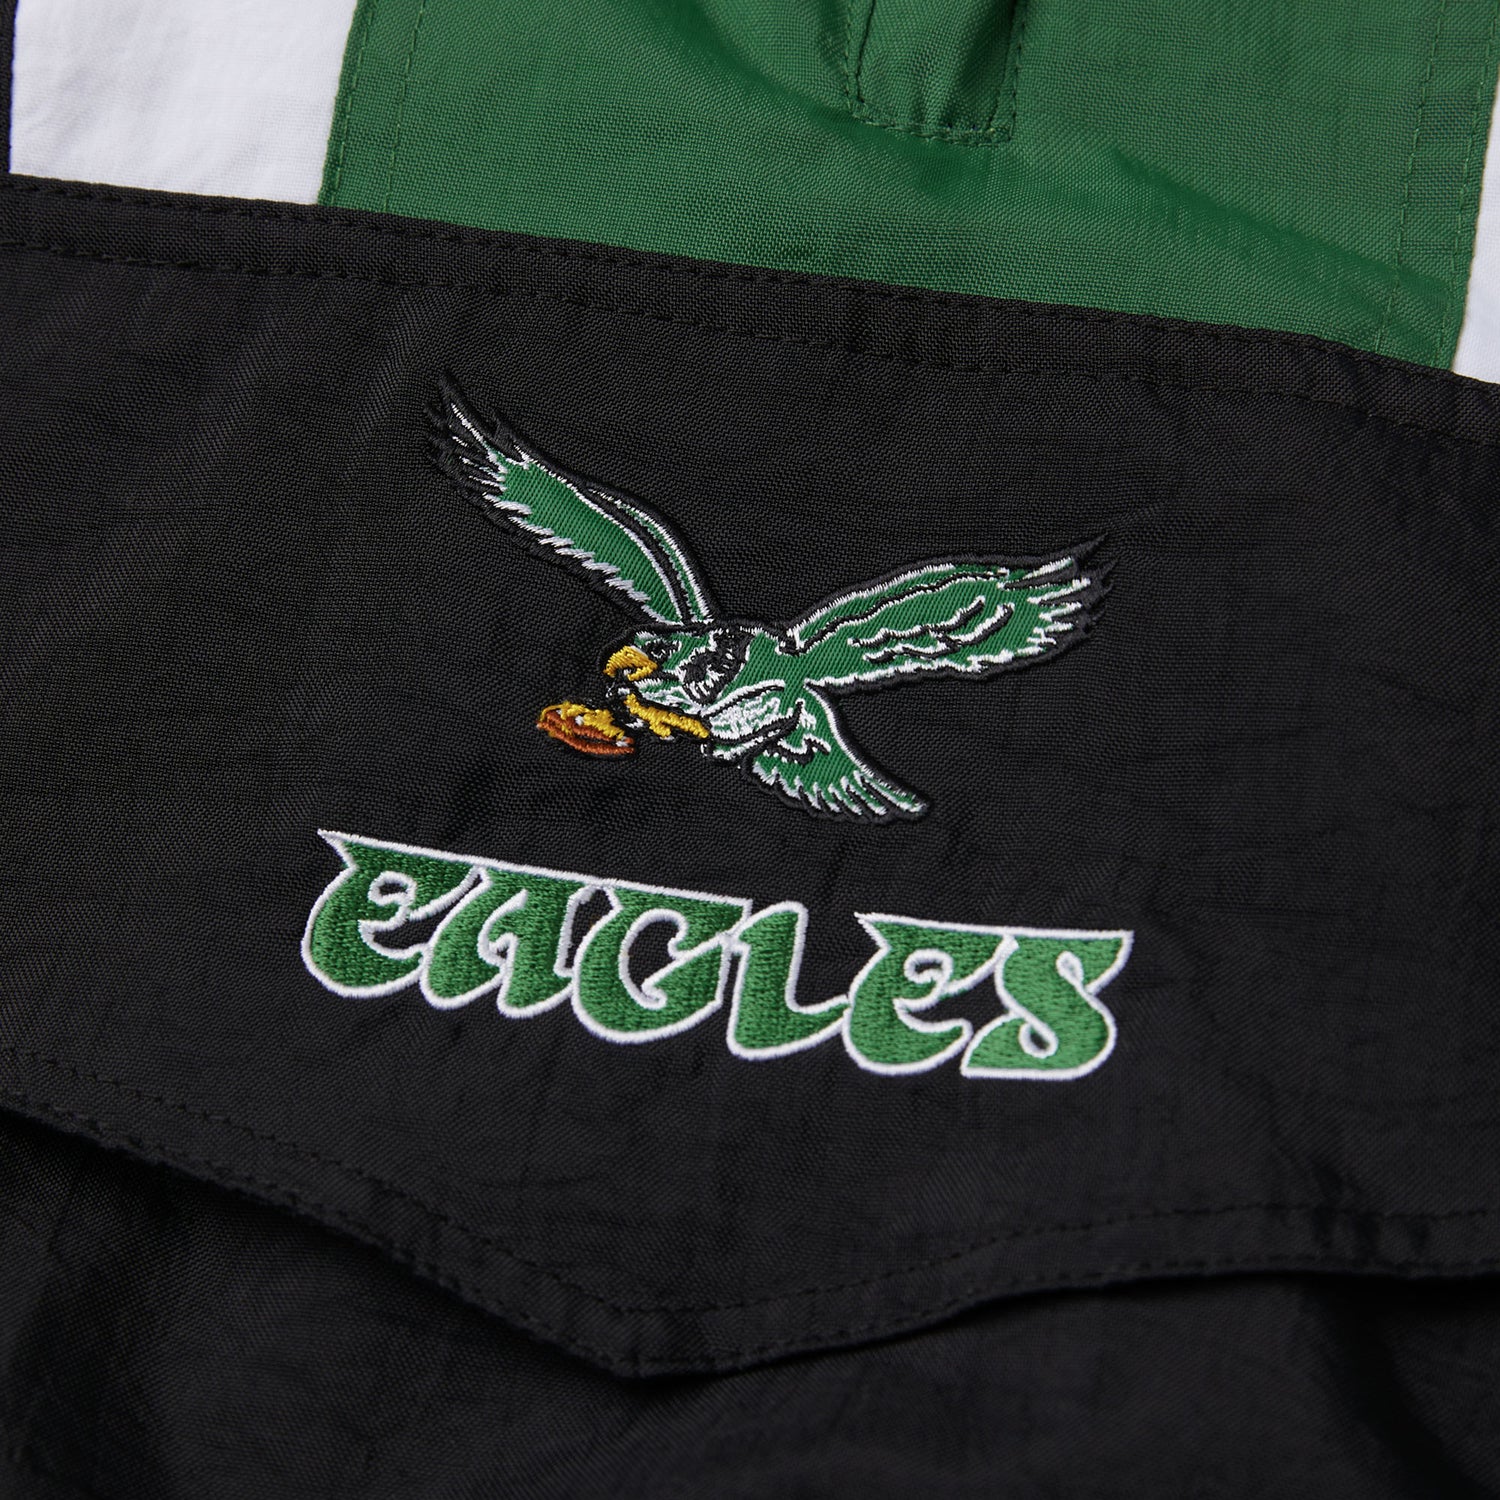 Homage x Starter Philadelphia Eagles Satin Jacket | Kelly Green Philadelphia Eagles Apparel from Homage. | Officially Licensed NFL Apparel from Homage